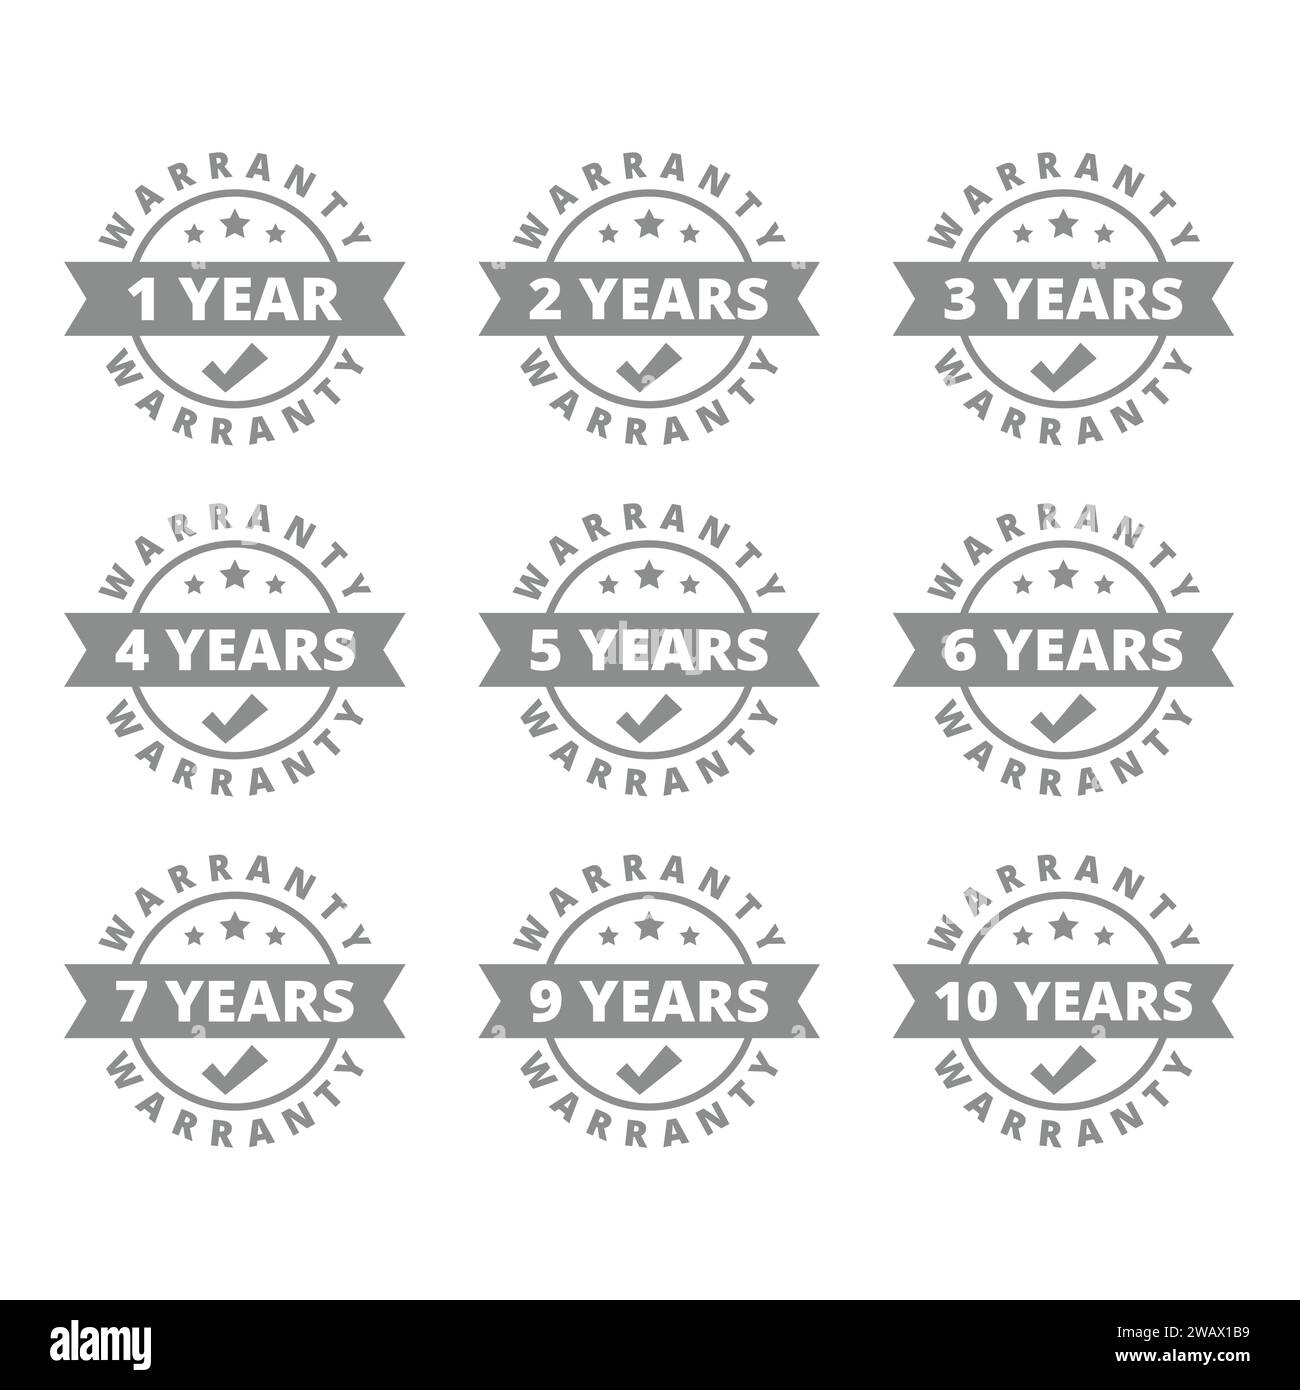 Warranty year vector label set. 1,3,5 years guarantee circle labels. Stock Vector